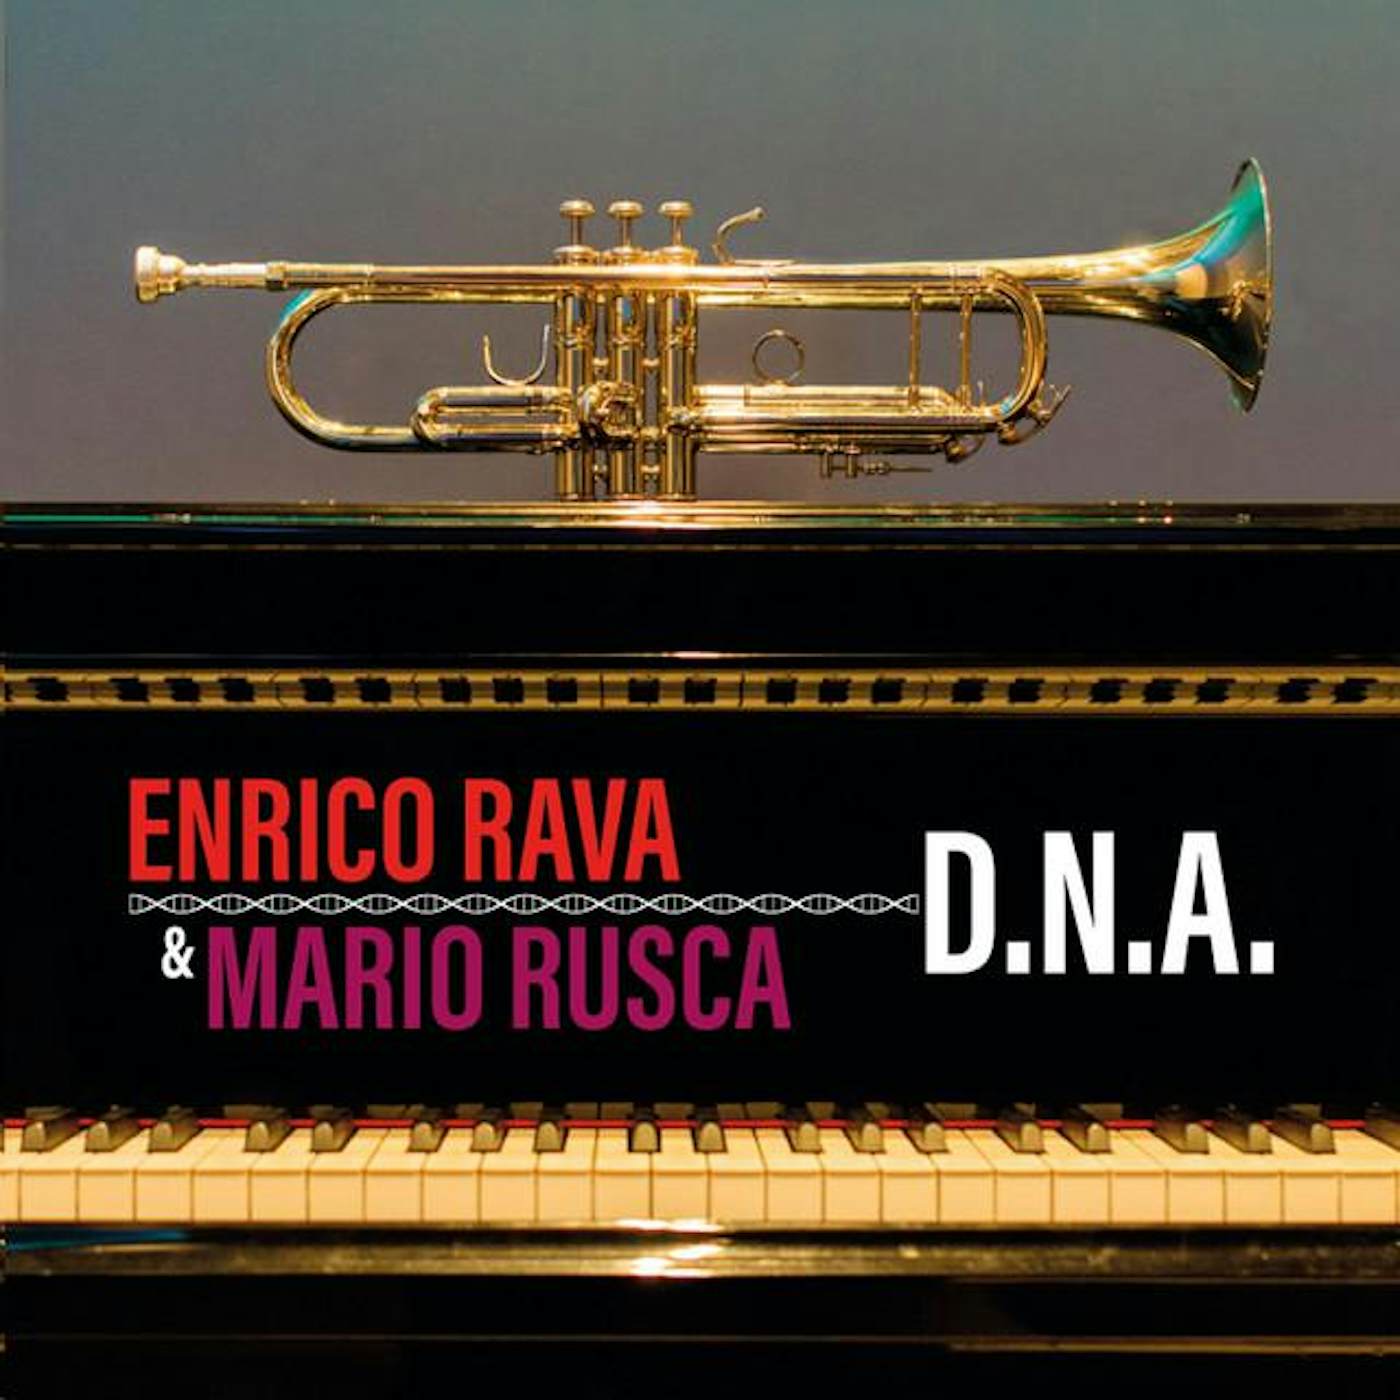 Mario Rusca Trio